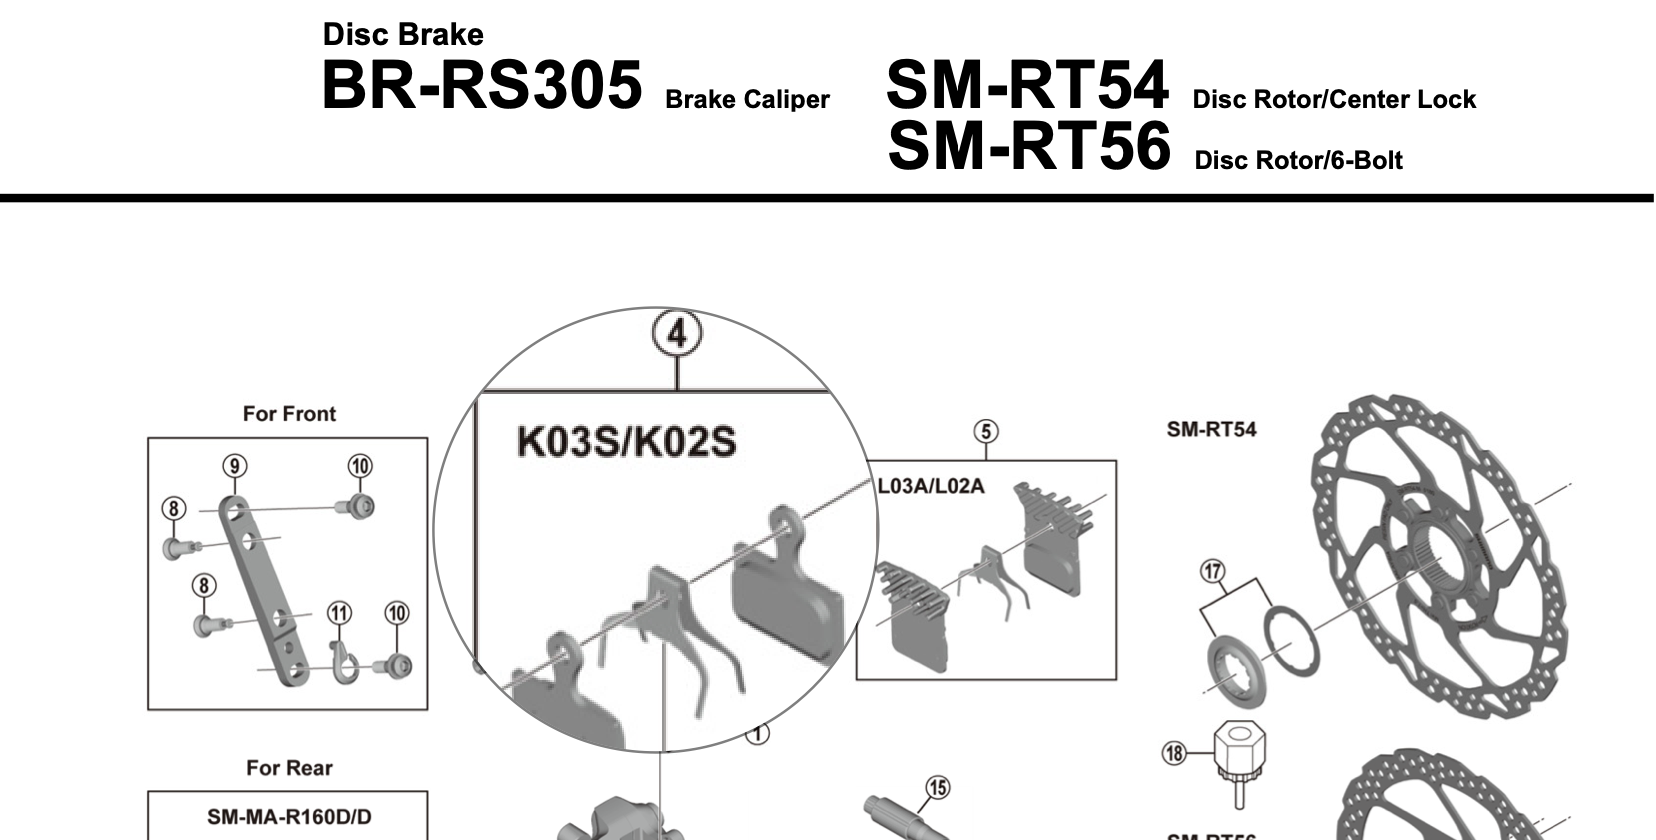 Shimano Shimano K03S Resin Disc Brake Pads - Resin, Steel Backed, Fits 105 BR-R7070, Tiagra BR-4770, BR-RS405, BR-R8070, BR-R9170